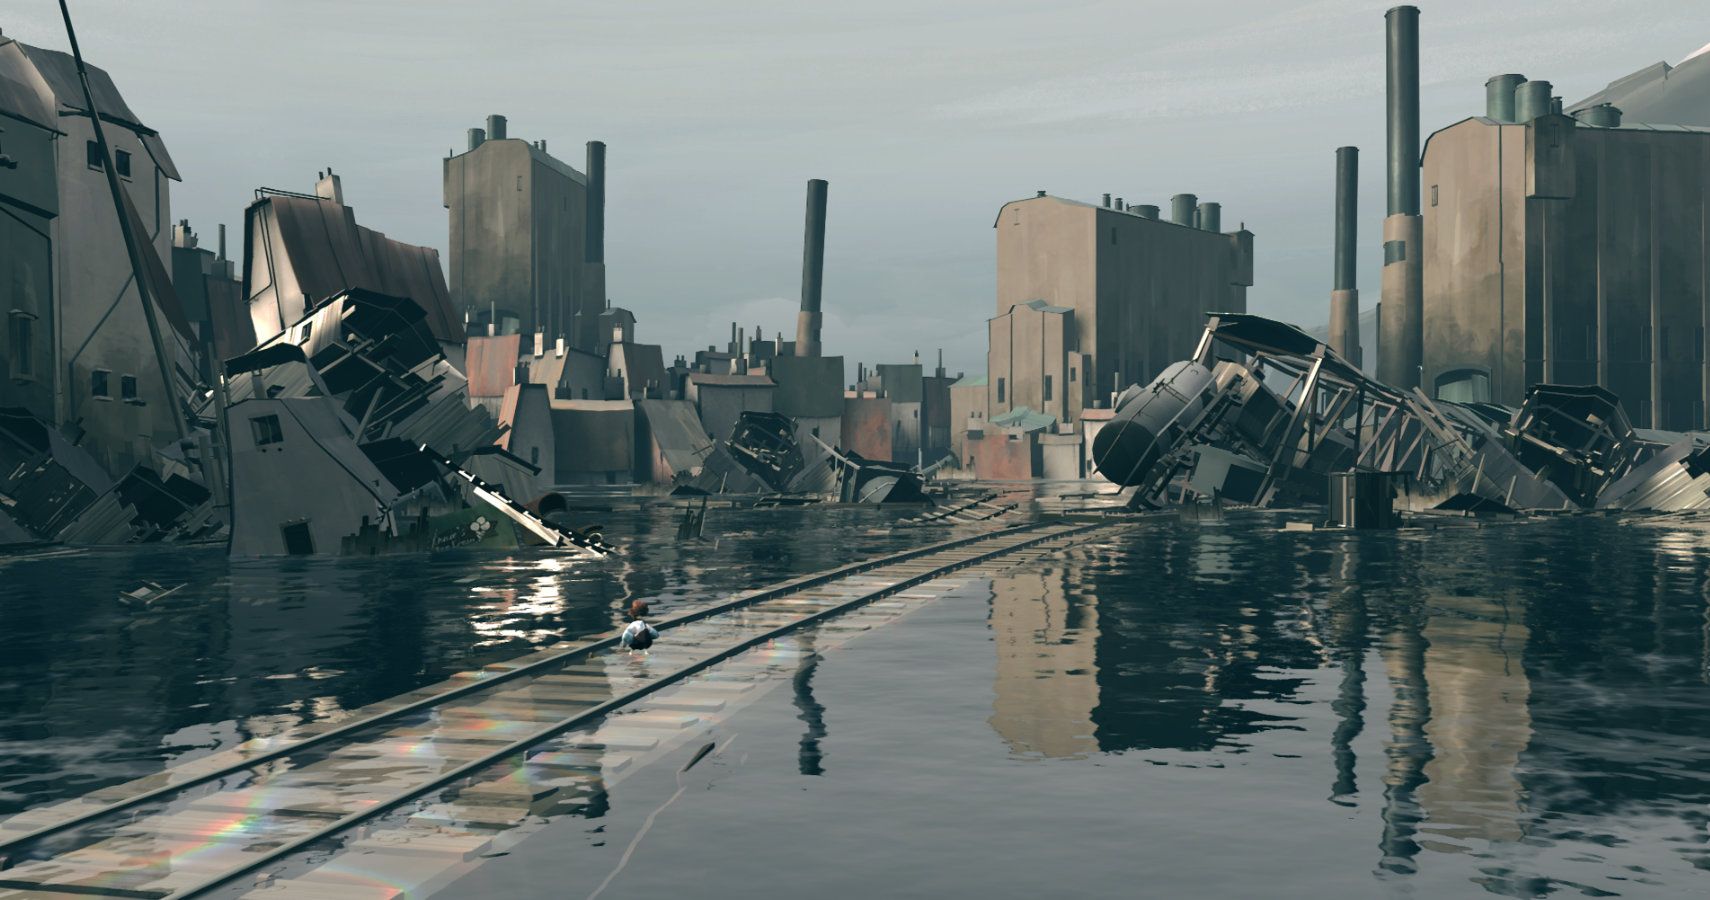 a sunked railway line runs through a desolate city semi-underwater.